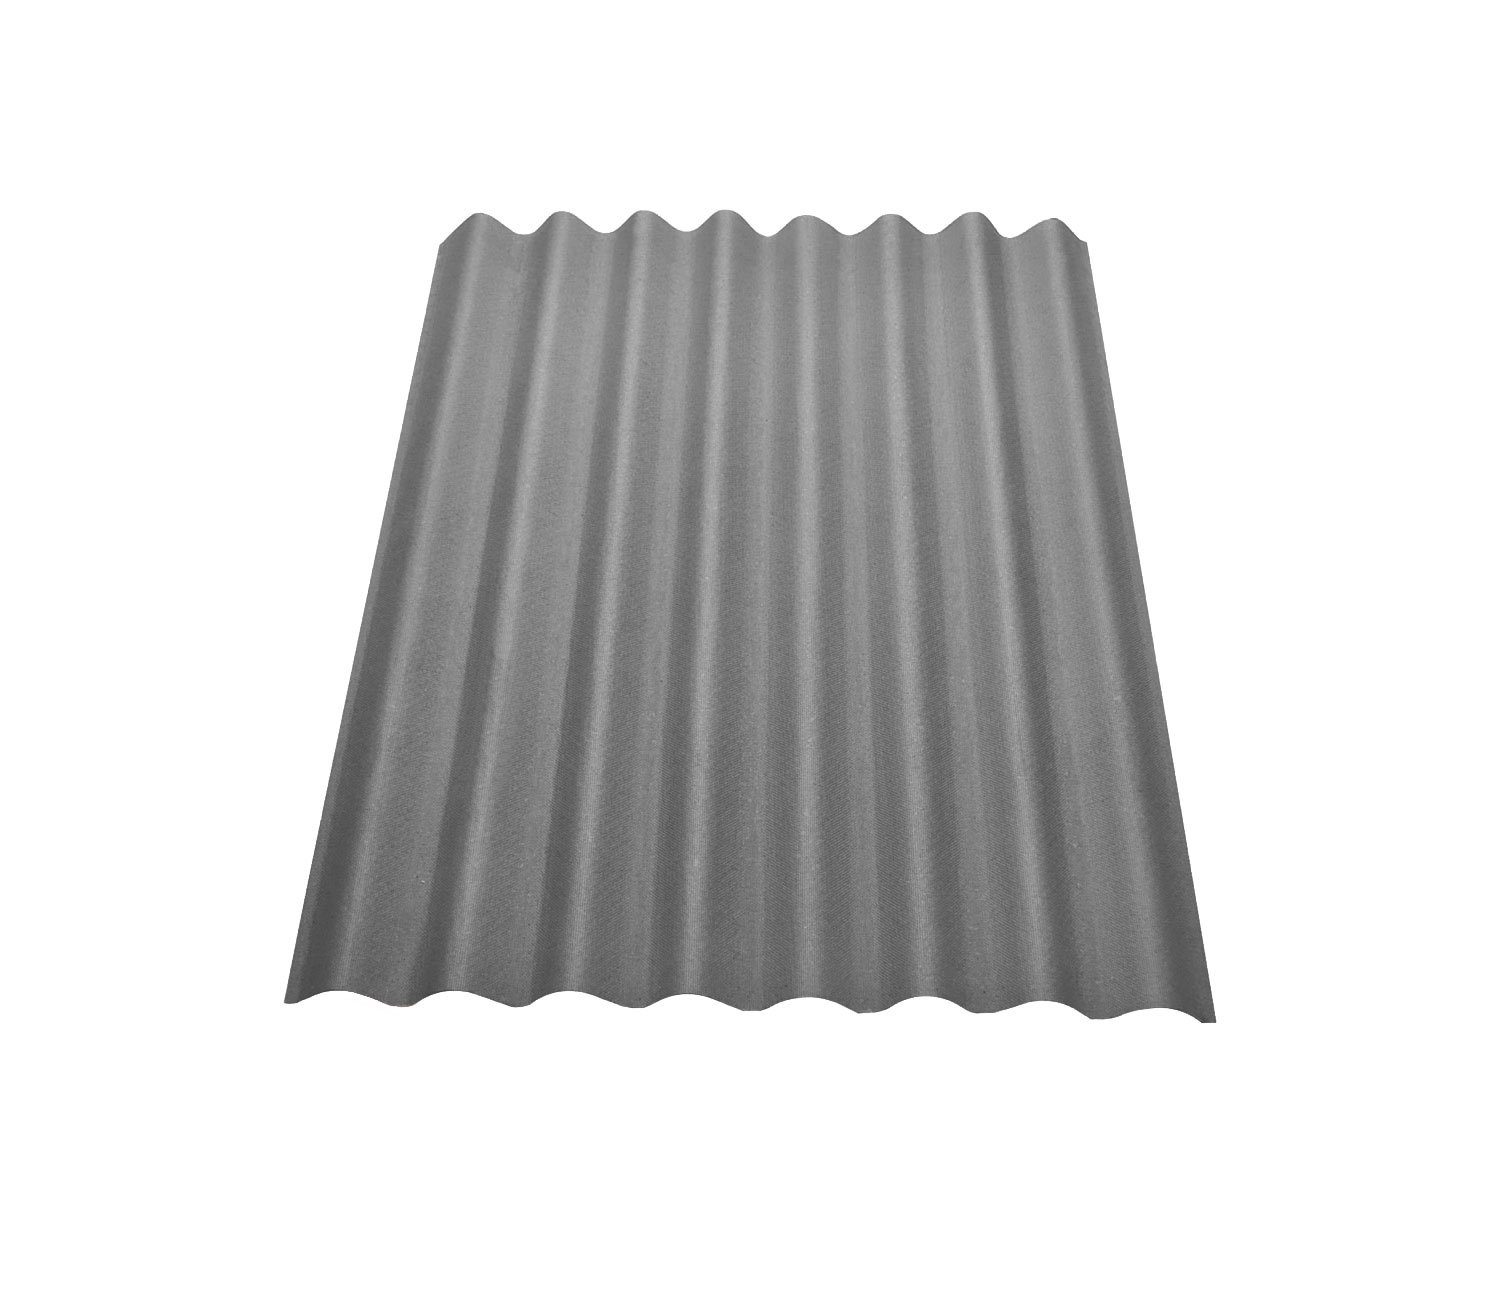 Onduline Dachpappe Onduline Easyline Dachplatte Wandplatte Bitumenwellplatten Wellplatte 1x0,76m - grau, wellig, 0.76 m² pro Paket, (1-St)